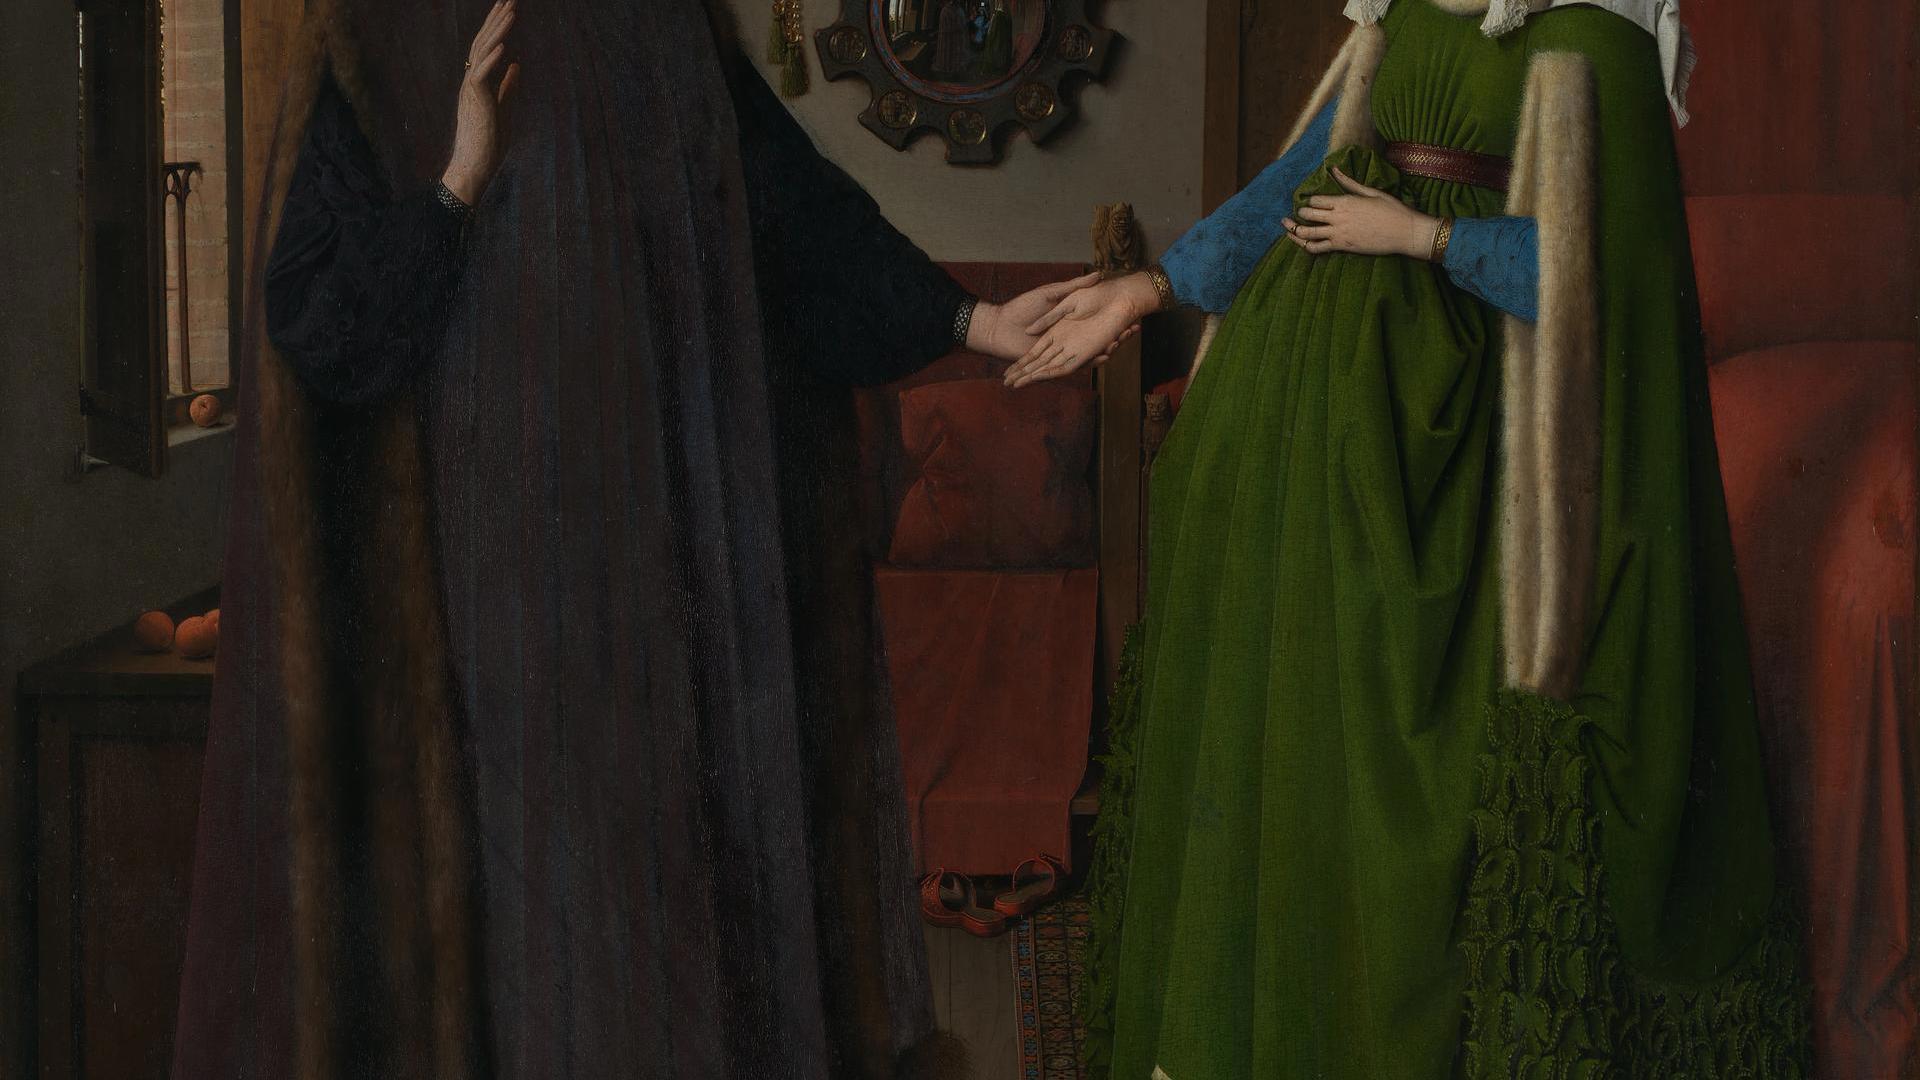 The Arnolfini Portrait by Jan van Eyck